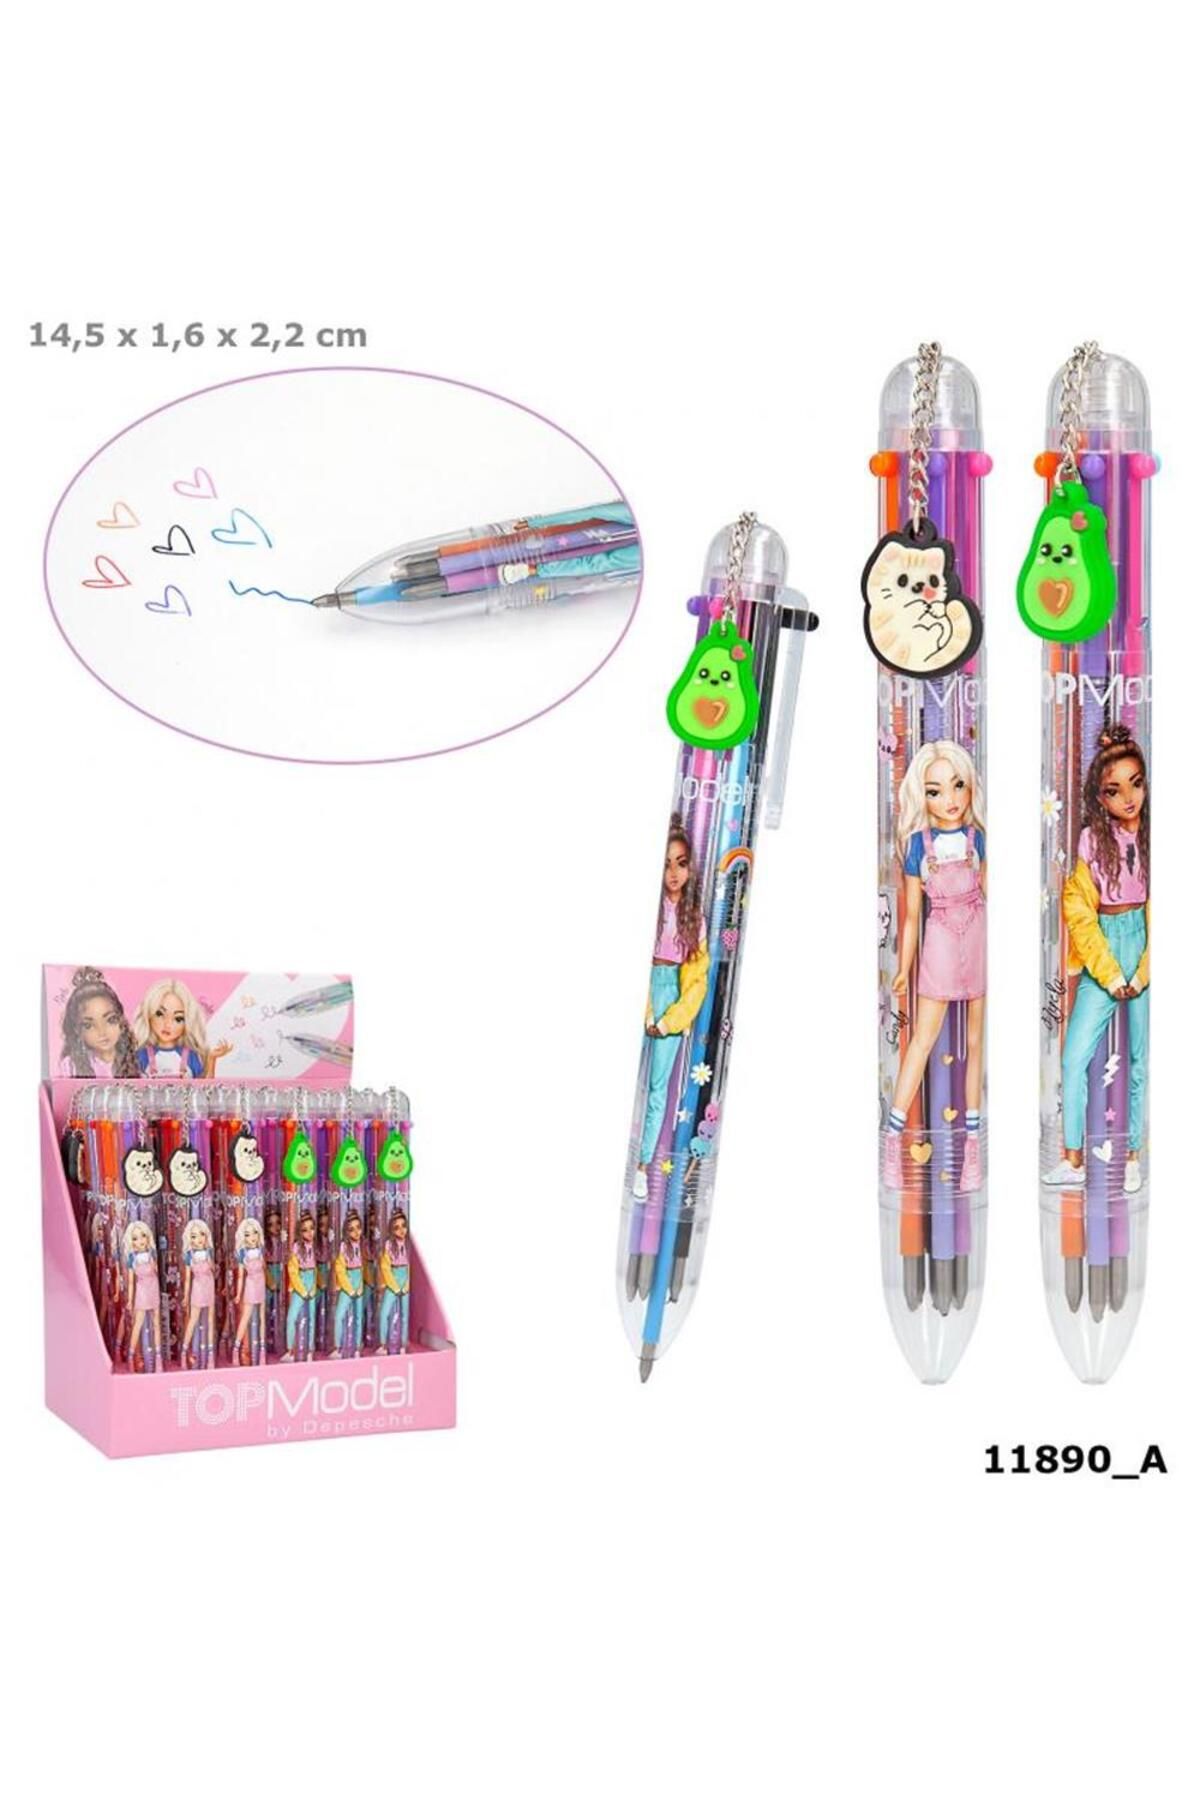 Top Model Topmodel Gel Pen With 6 Colors